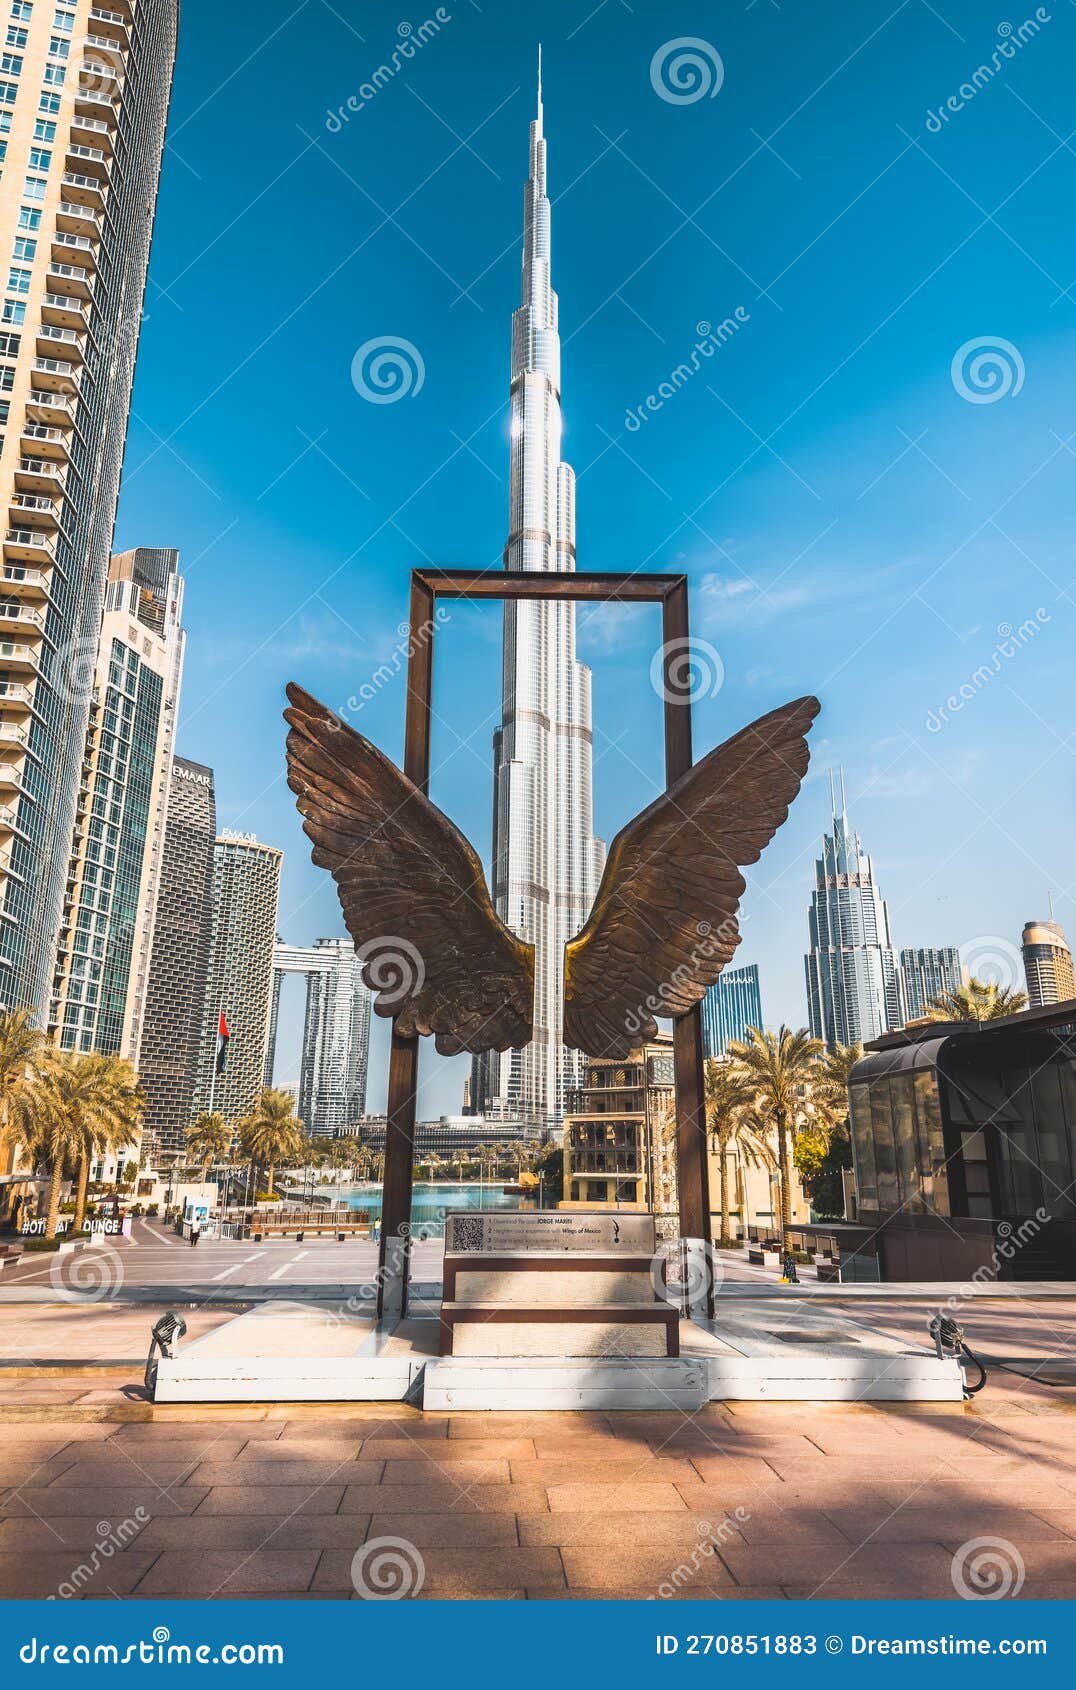 Mariah Idrissi in the UAE: Model explores Abu Dhabi desert, poses with  falcon and visits Burj Khalifa